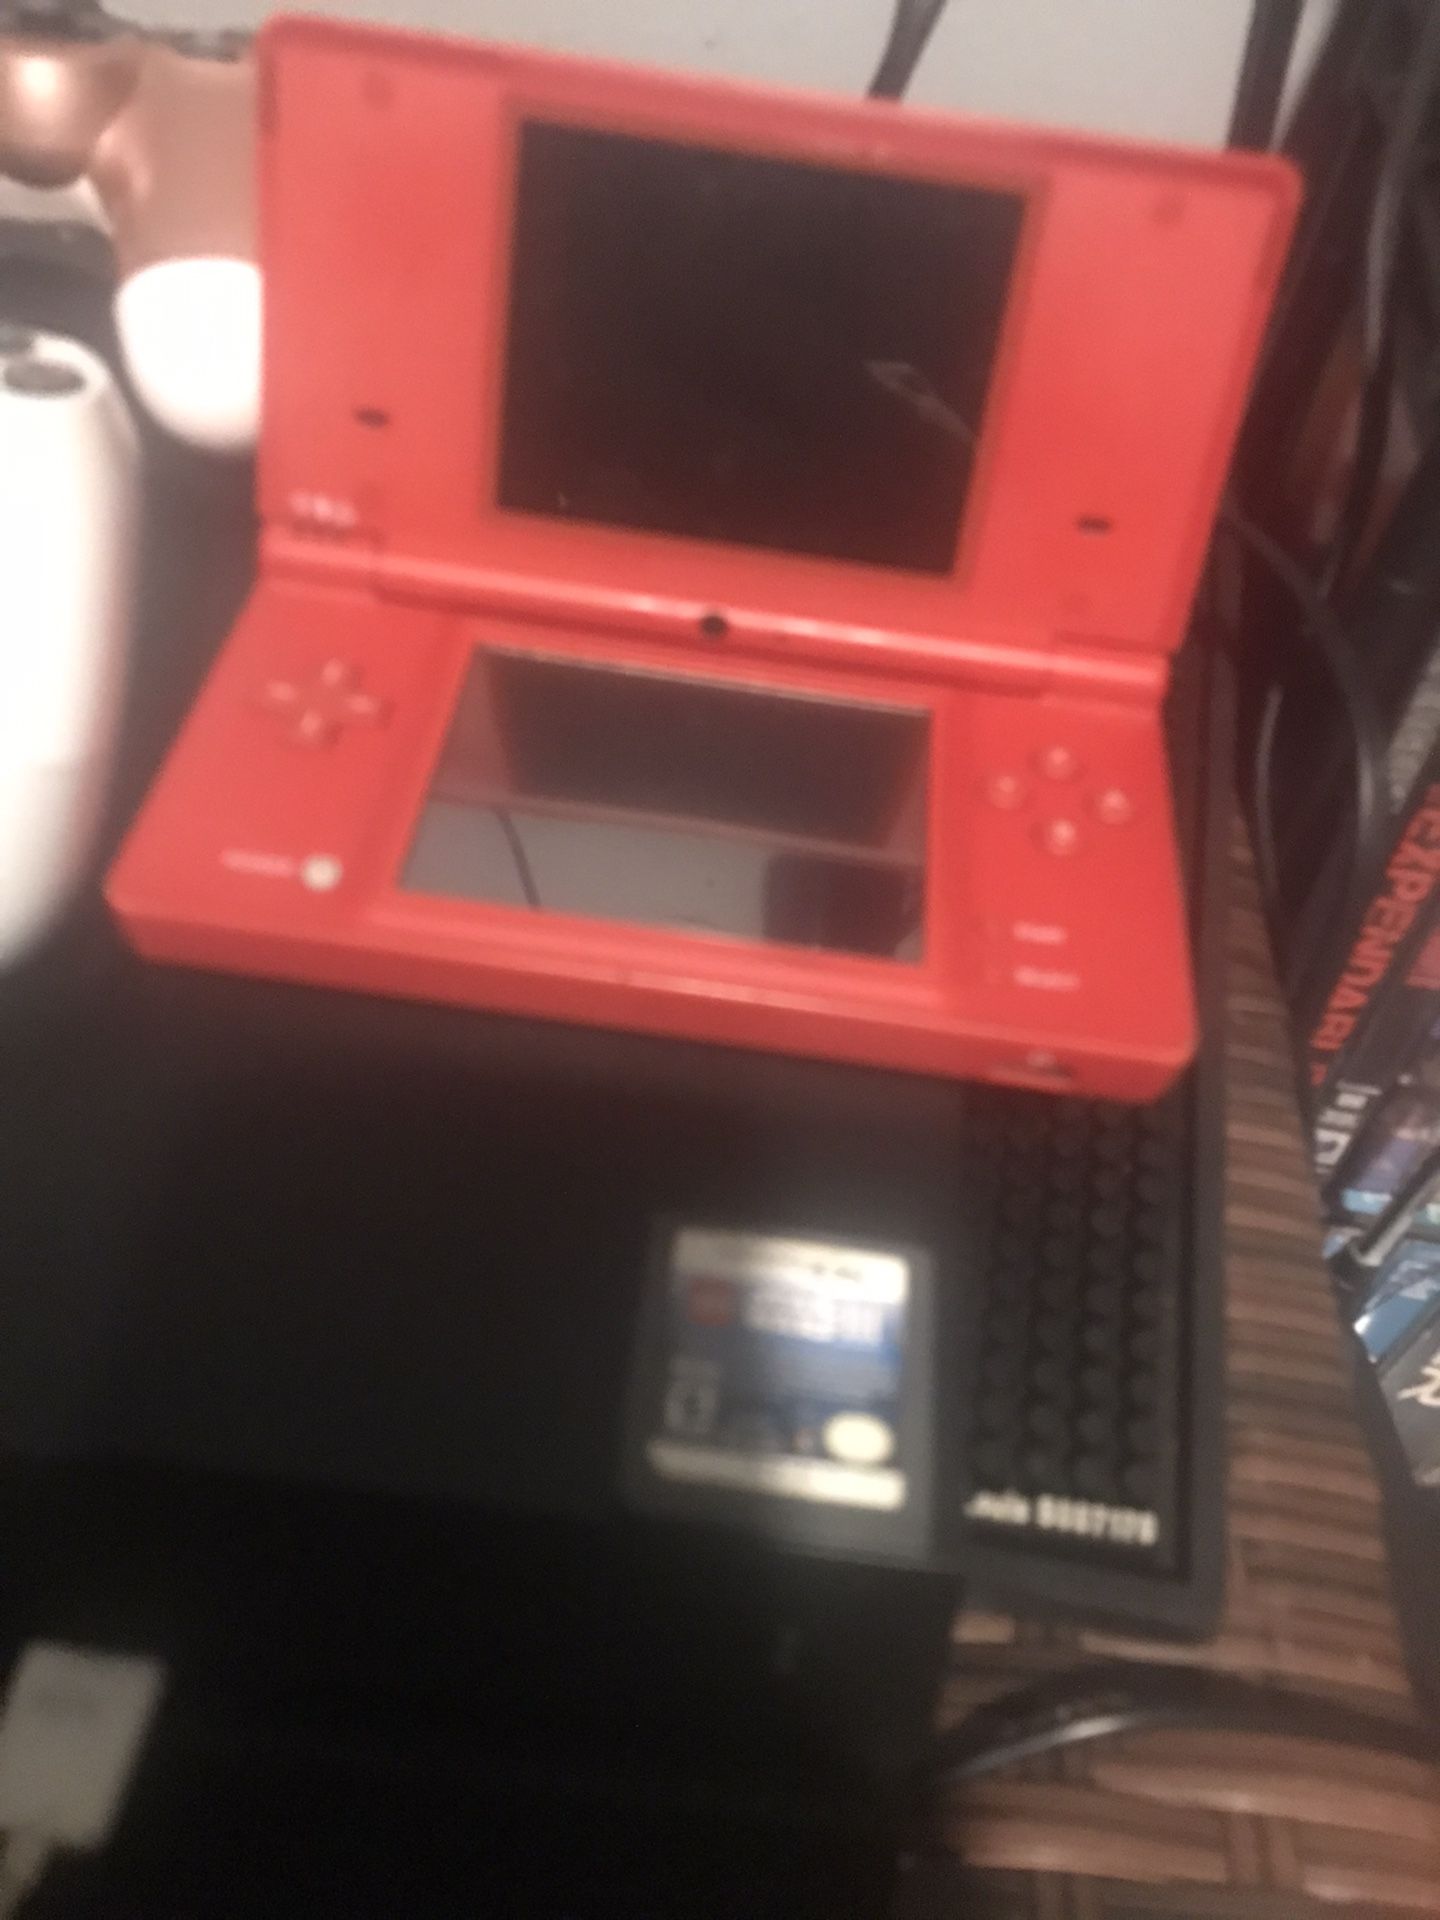 Handheld Retro Nintendo 3DS